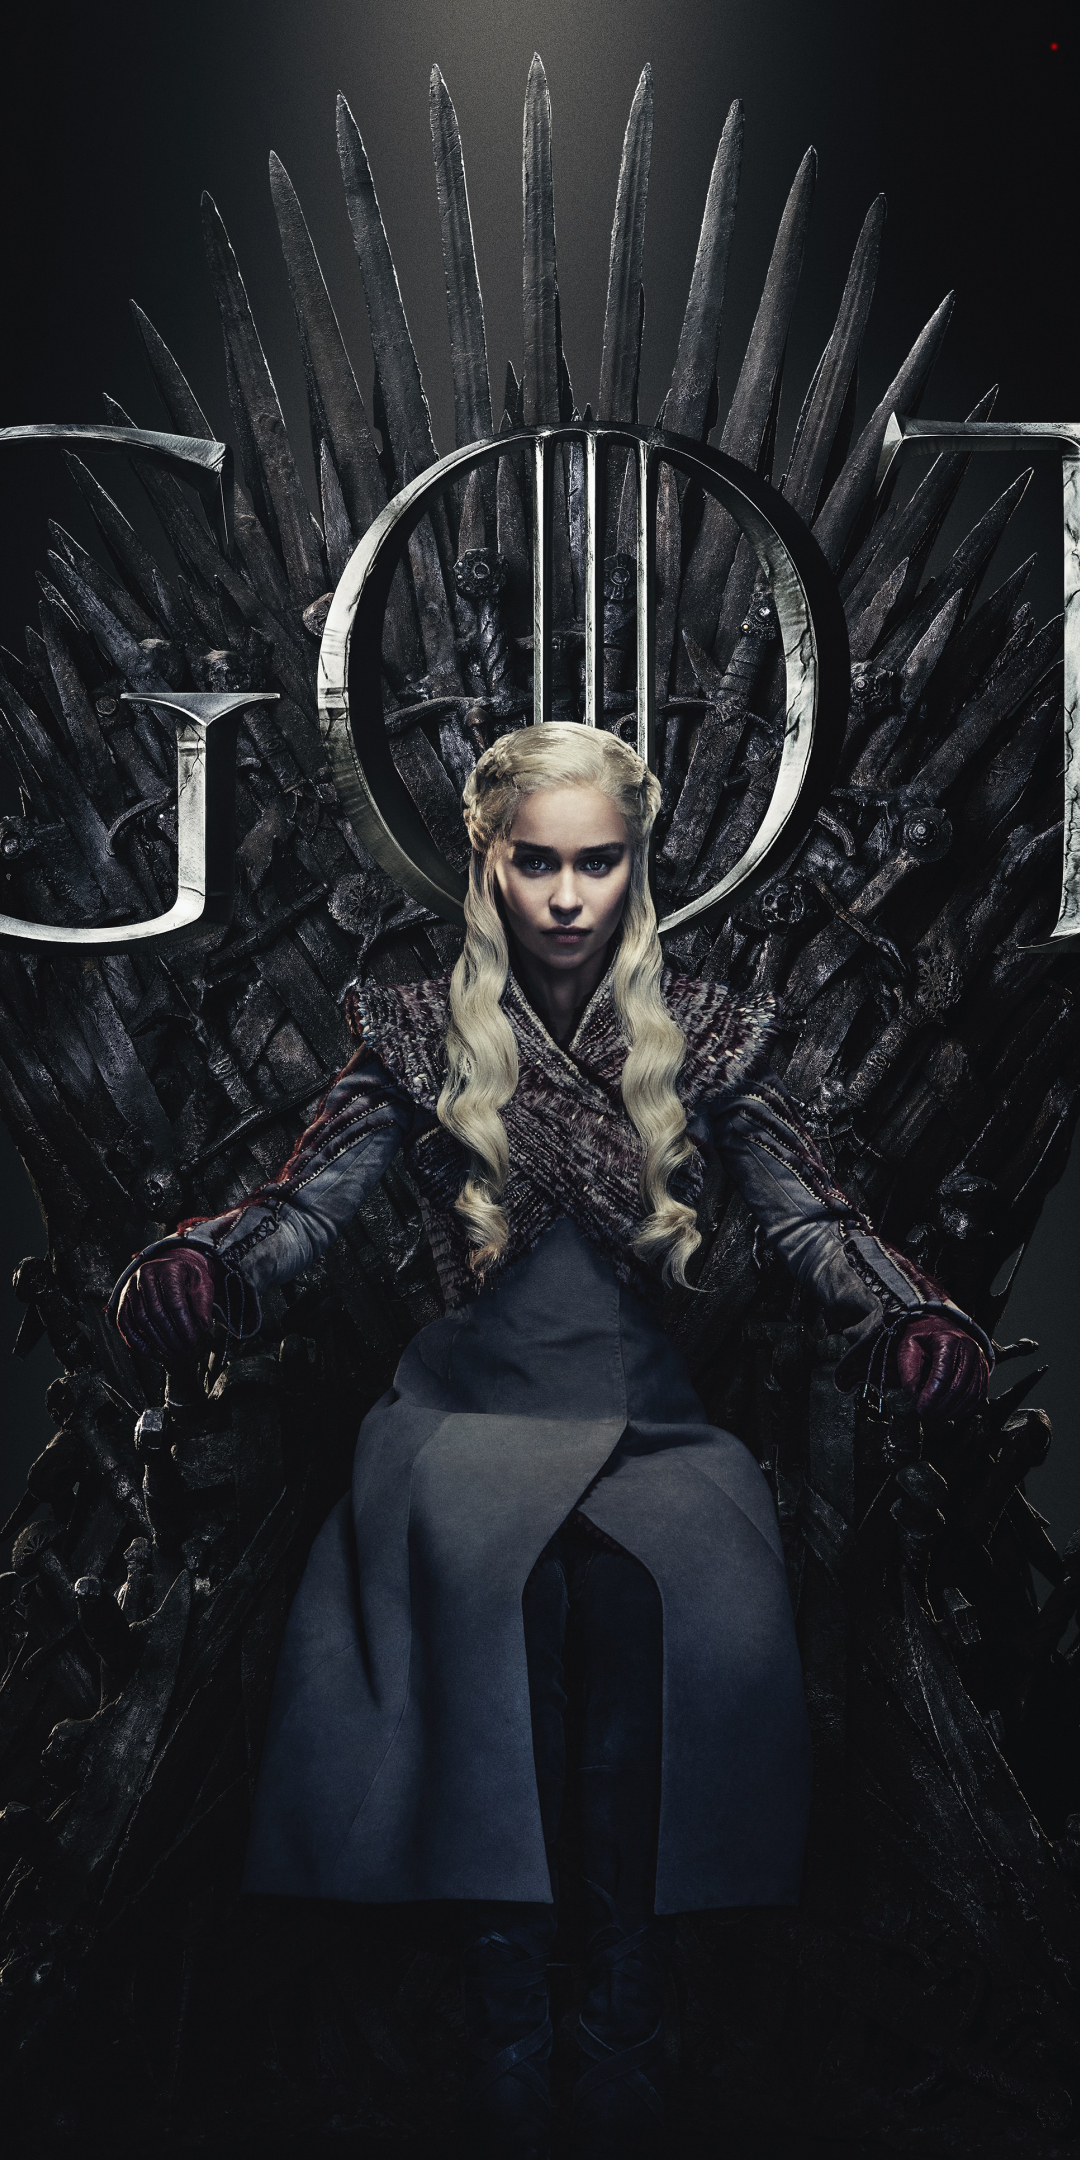 2019, Daenerys Targaryen, mother of dragons, Emilia Clarke, Game of Thrones, Season 8, 1080x2160 wallpaper